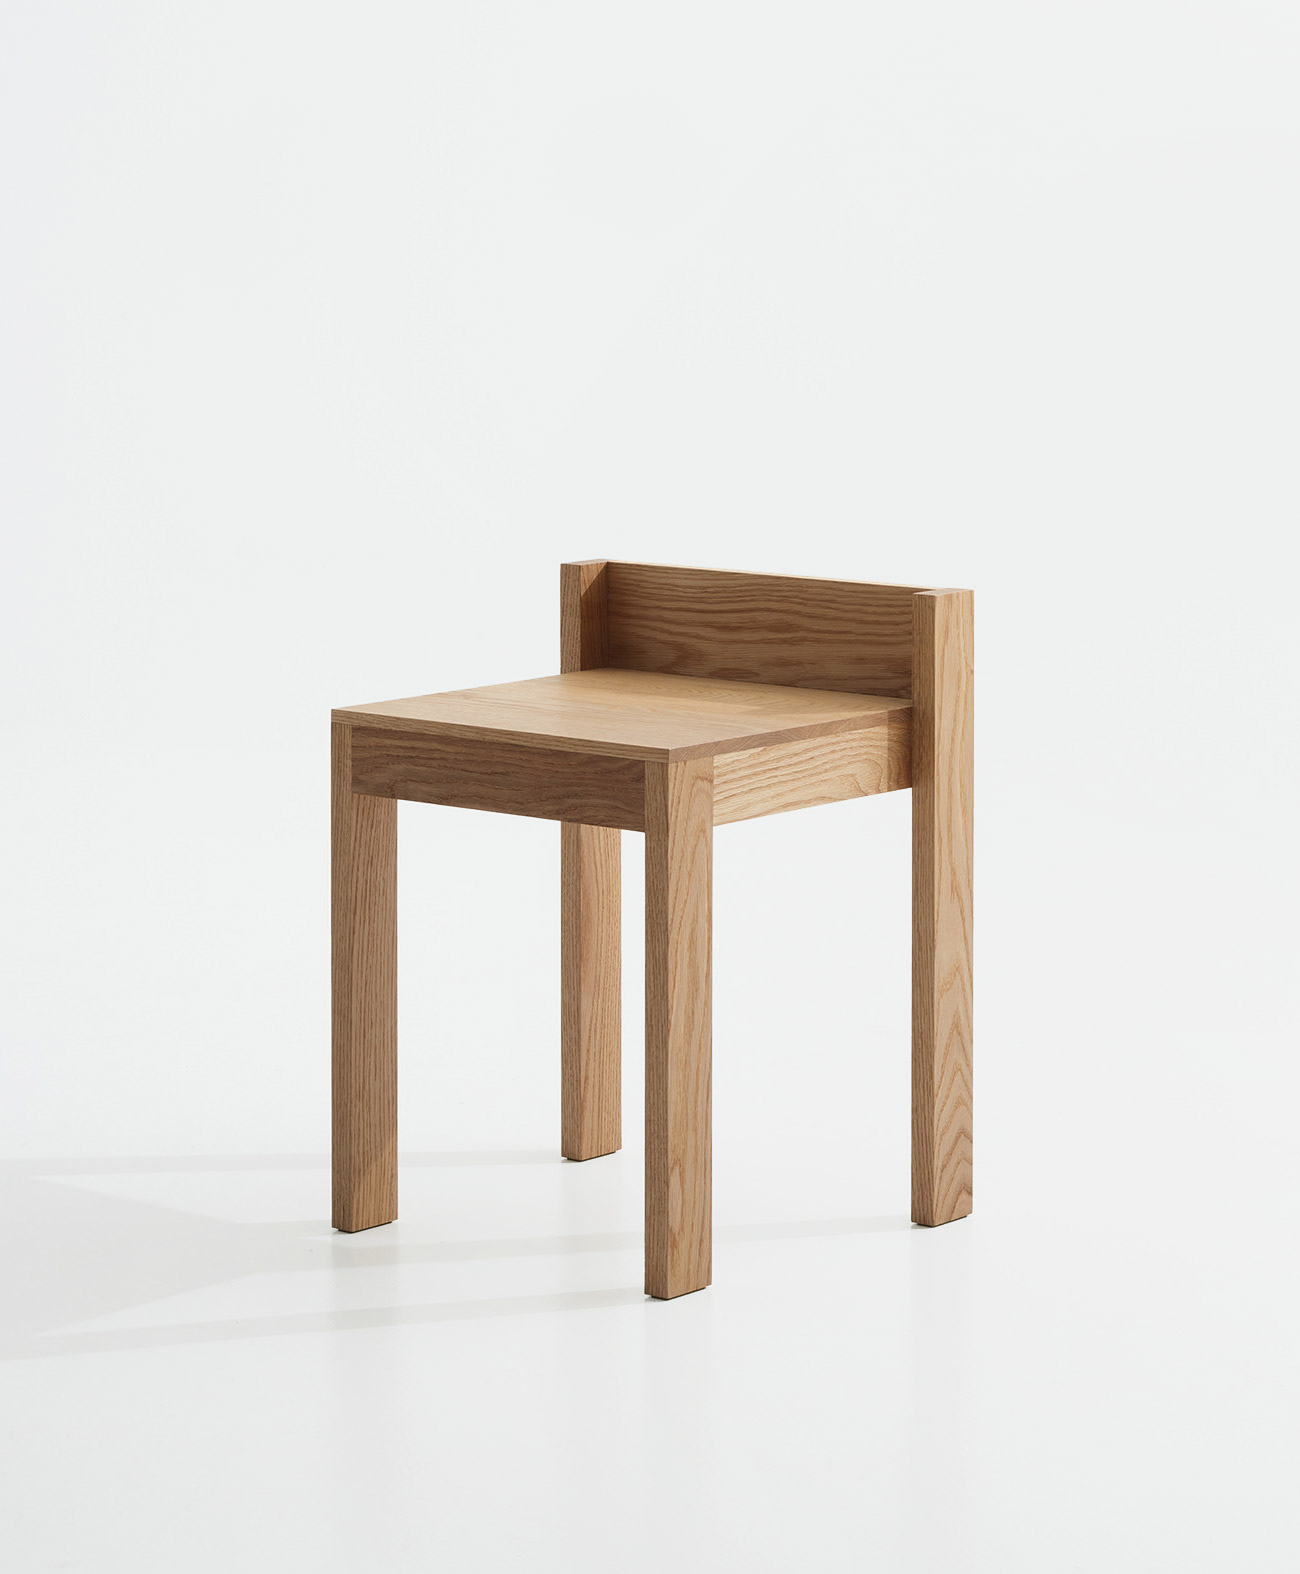 Minimalist Chair by Shin Youngjin